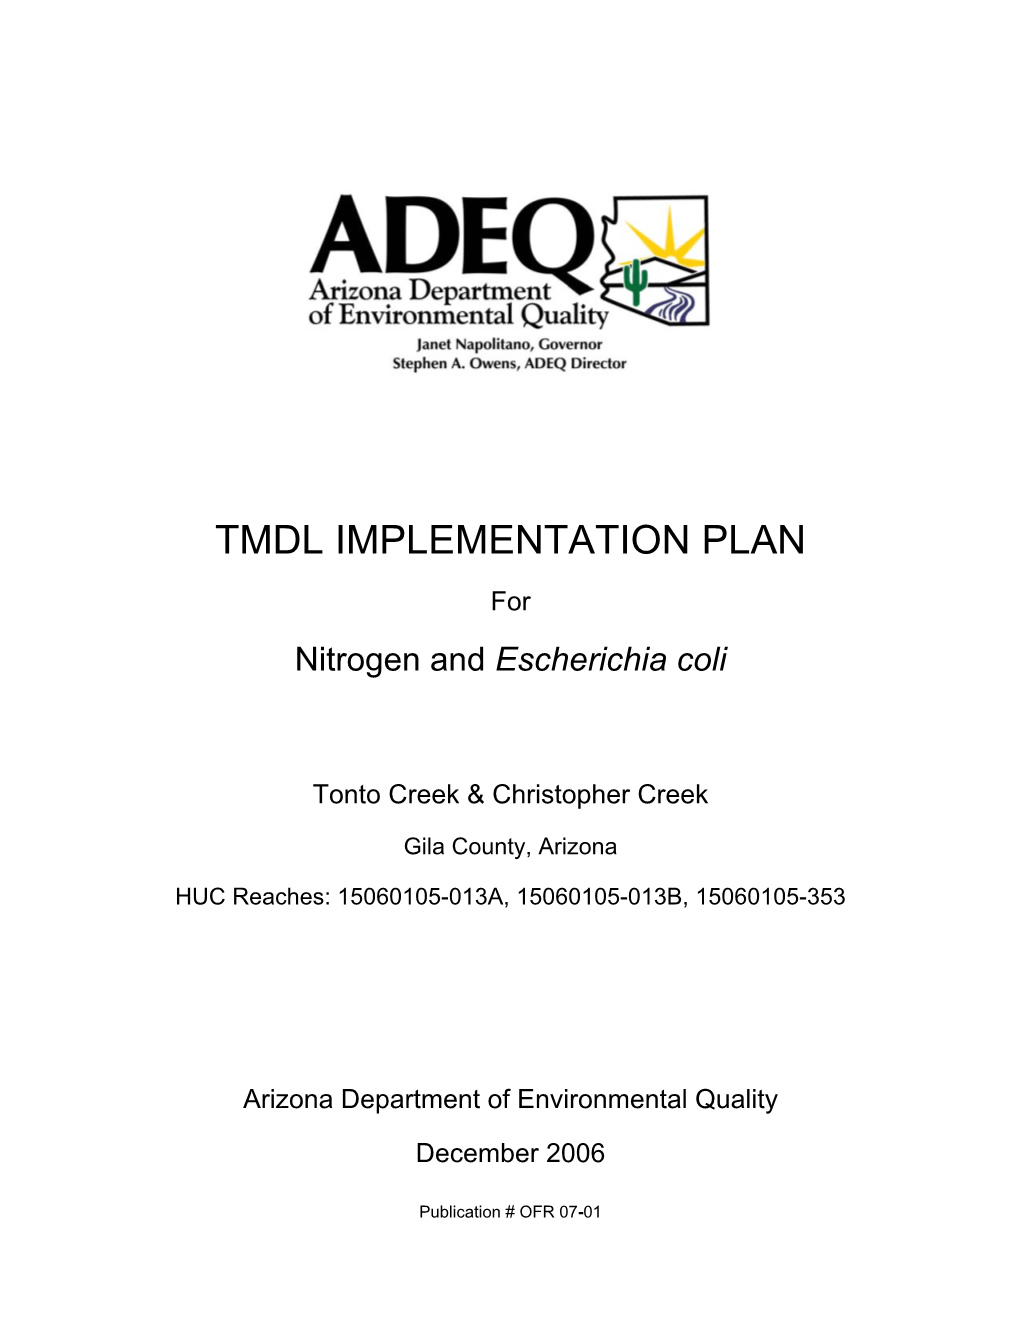 Tonto Creek and Christopher Creek TMDL Implementation Plan